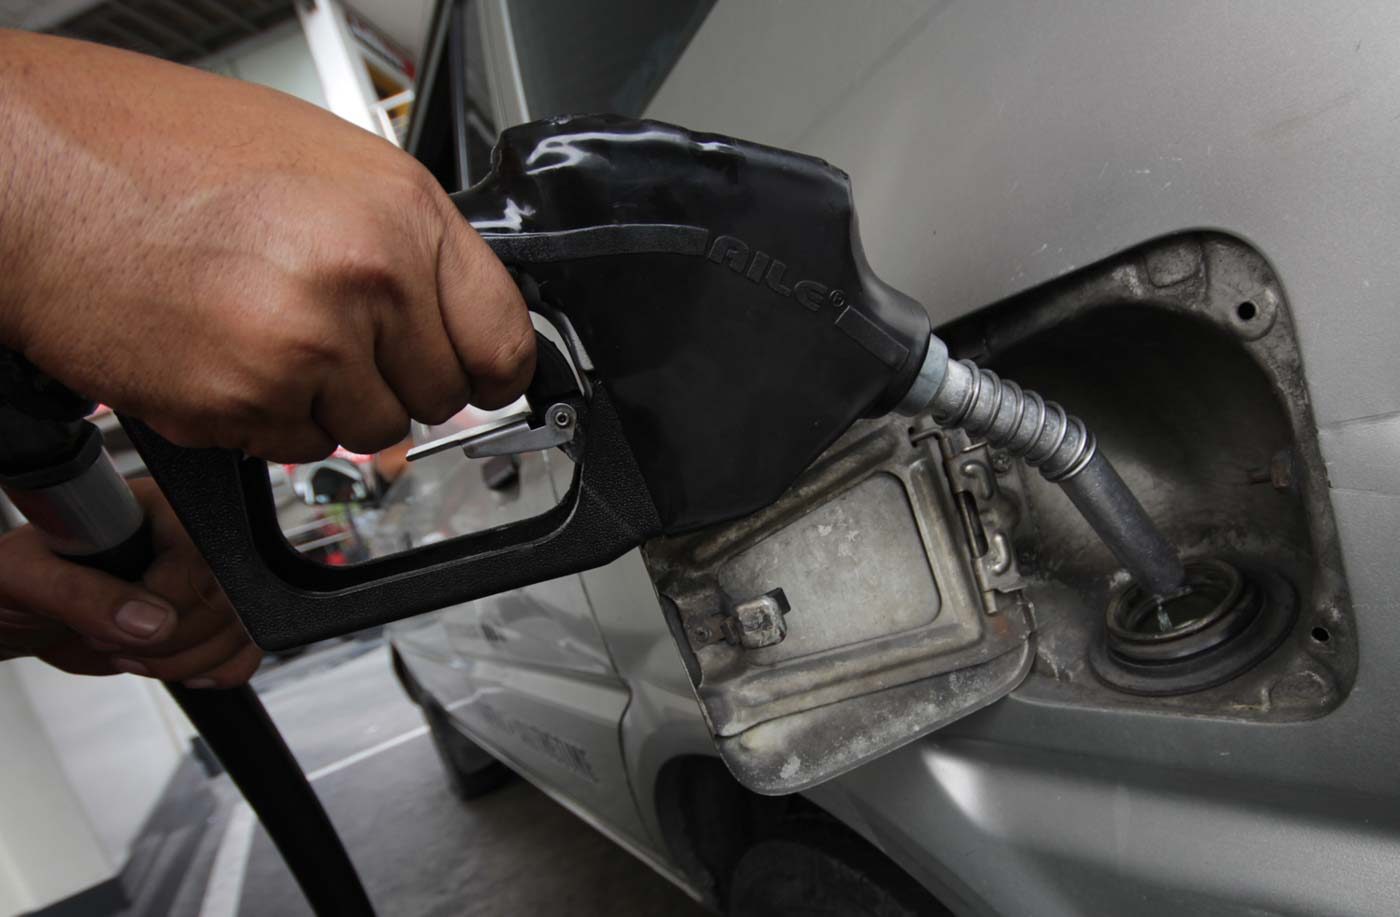 Gasoline prices down, diesel up on July 30